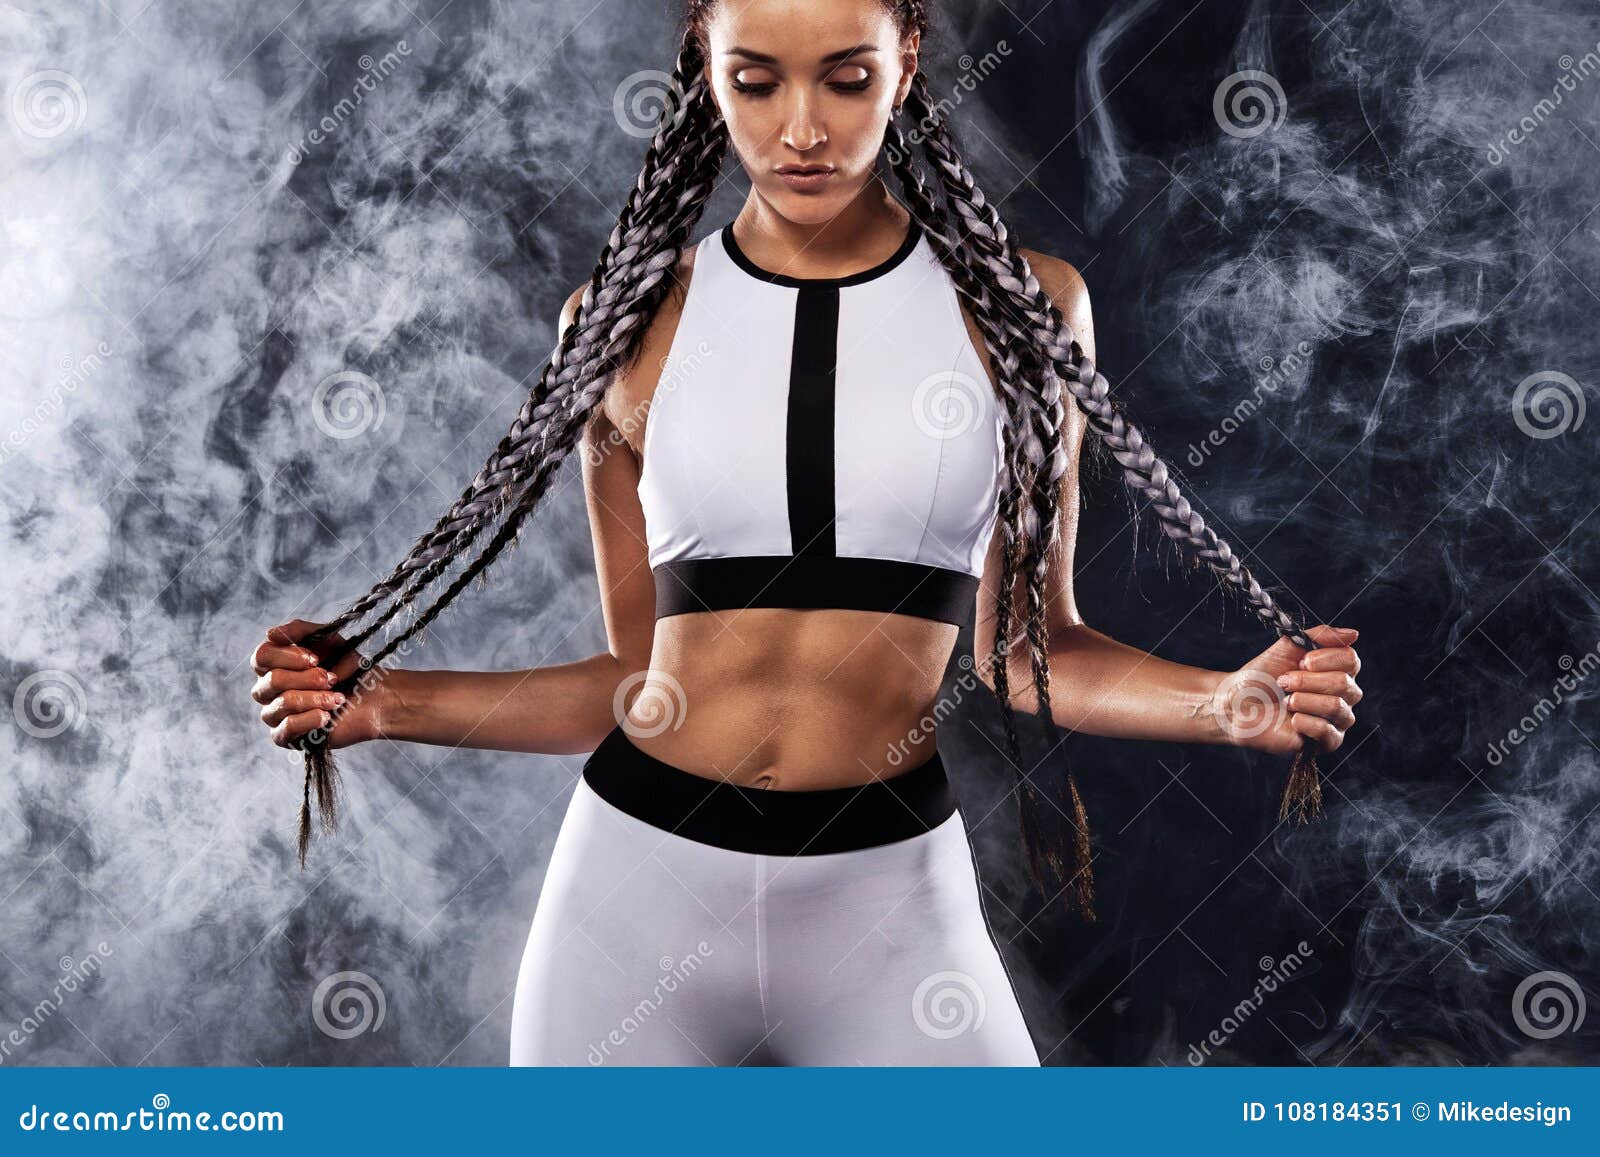 https://thumbs.dreamstime.com/z/strong-athletic-woman-black-background-wearing-white-sportswear-fitness-sport-motivation-concept-female-runner-108184351.jpg